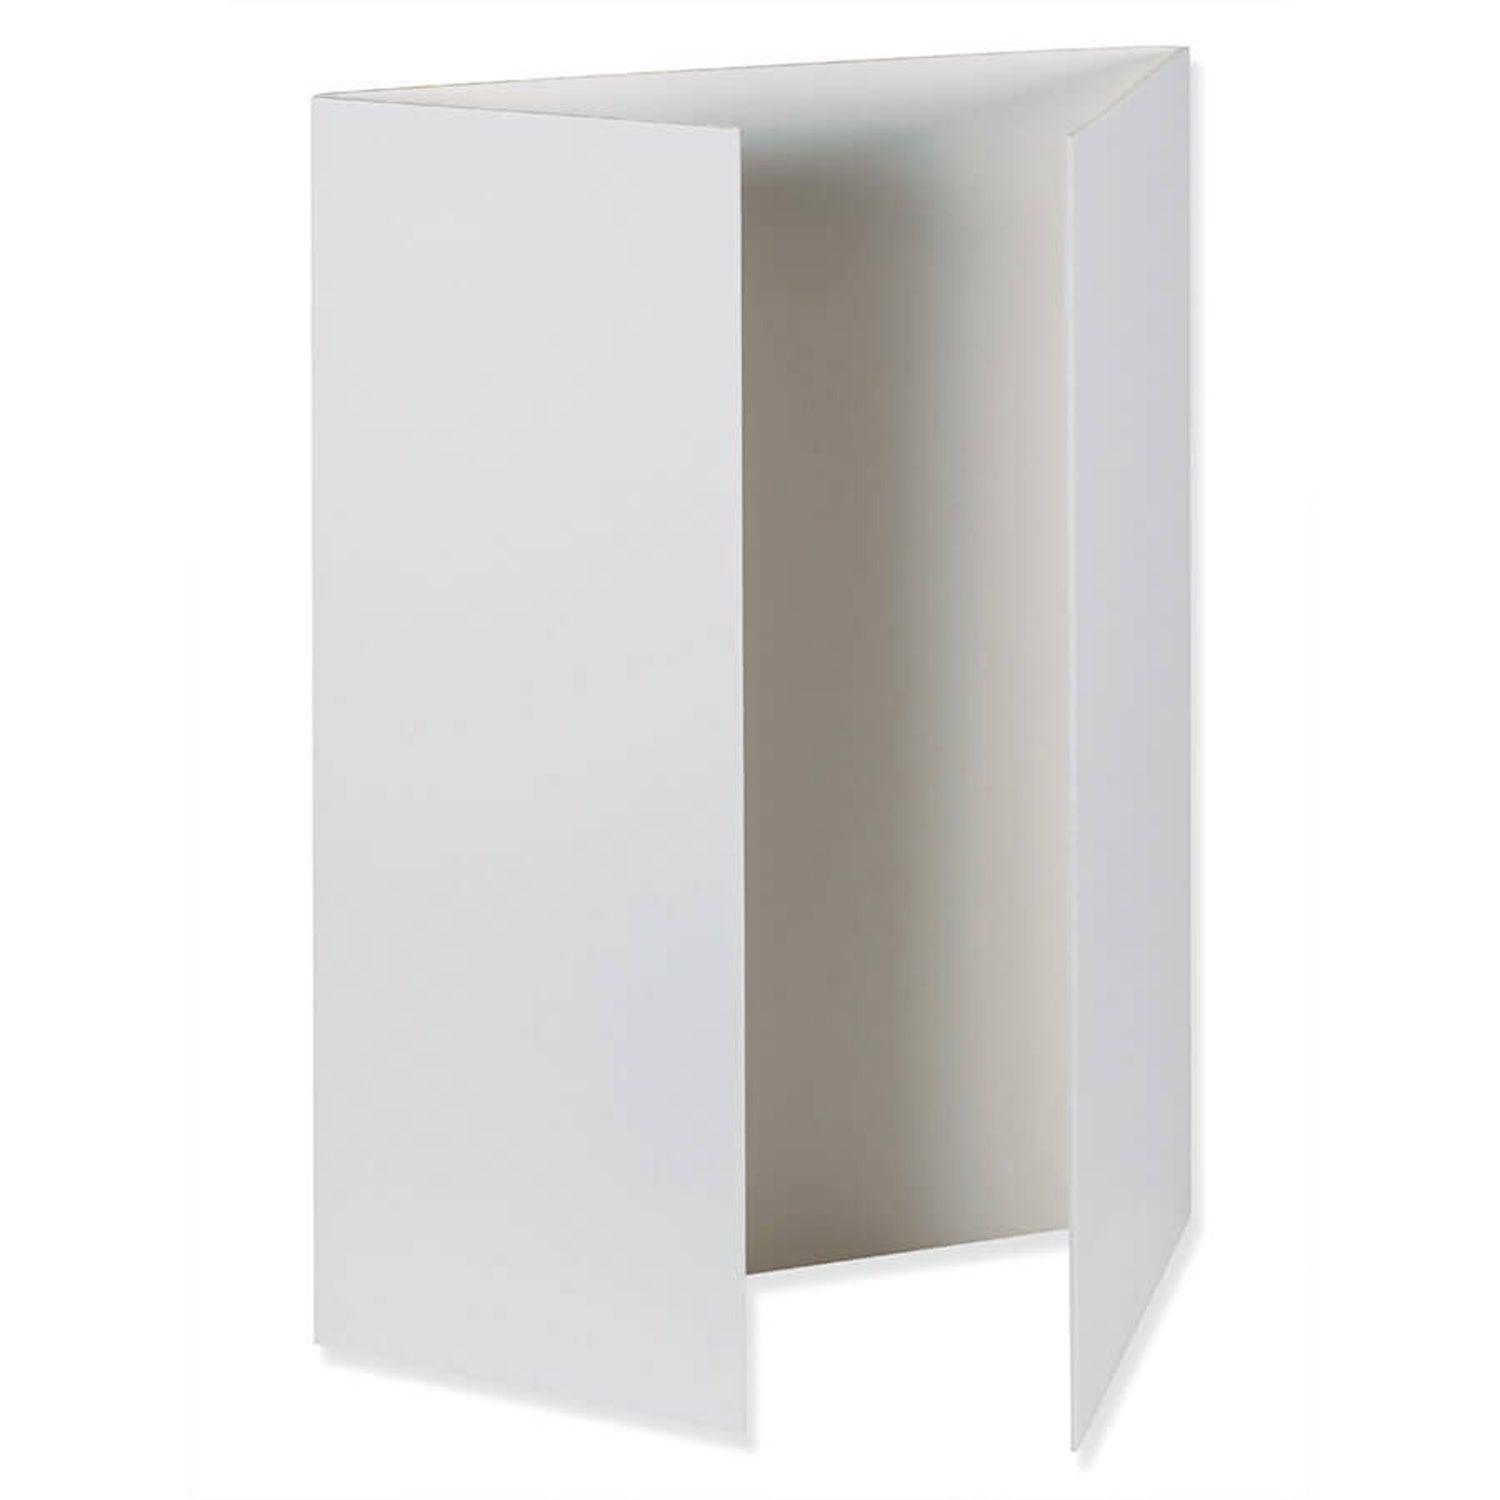 Foam Presentation Board, White, 48" x 36", 12 Boards - Loomini